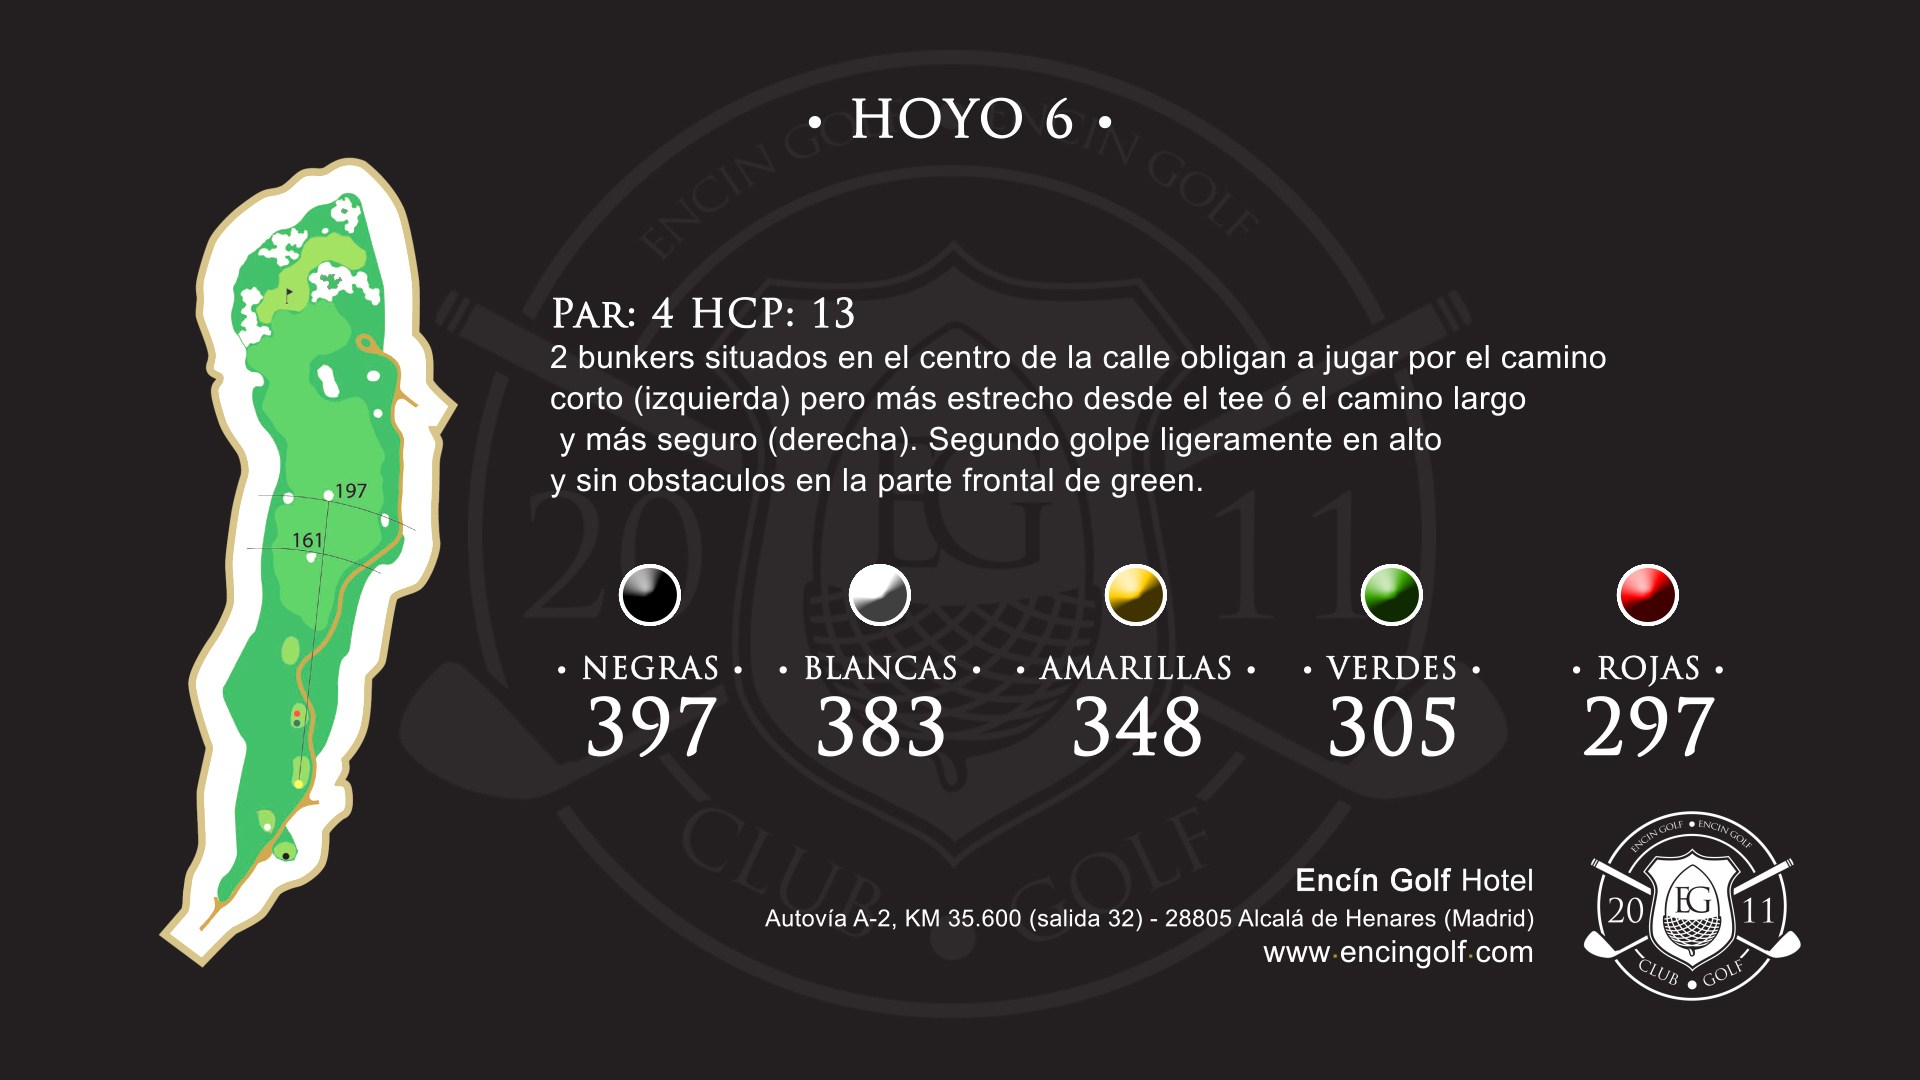 Hoyo 6 Encín Golf Hotel